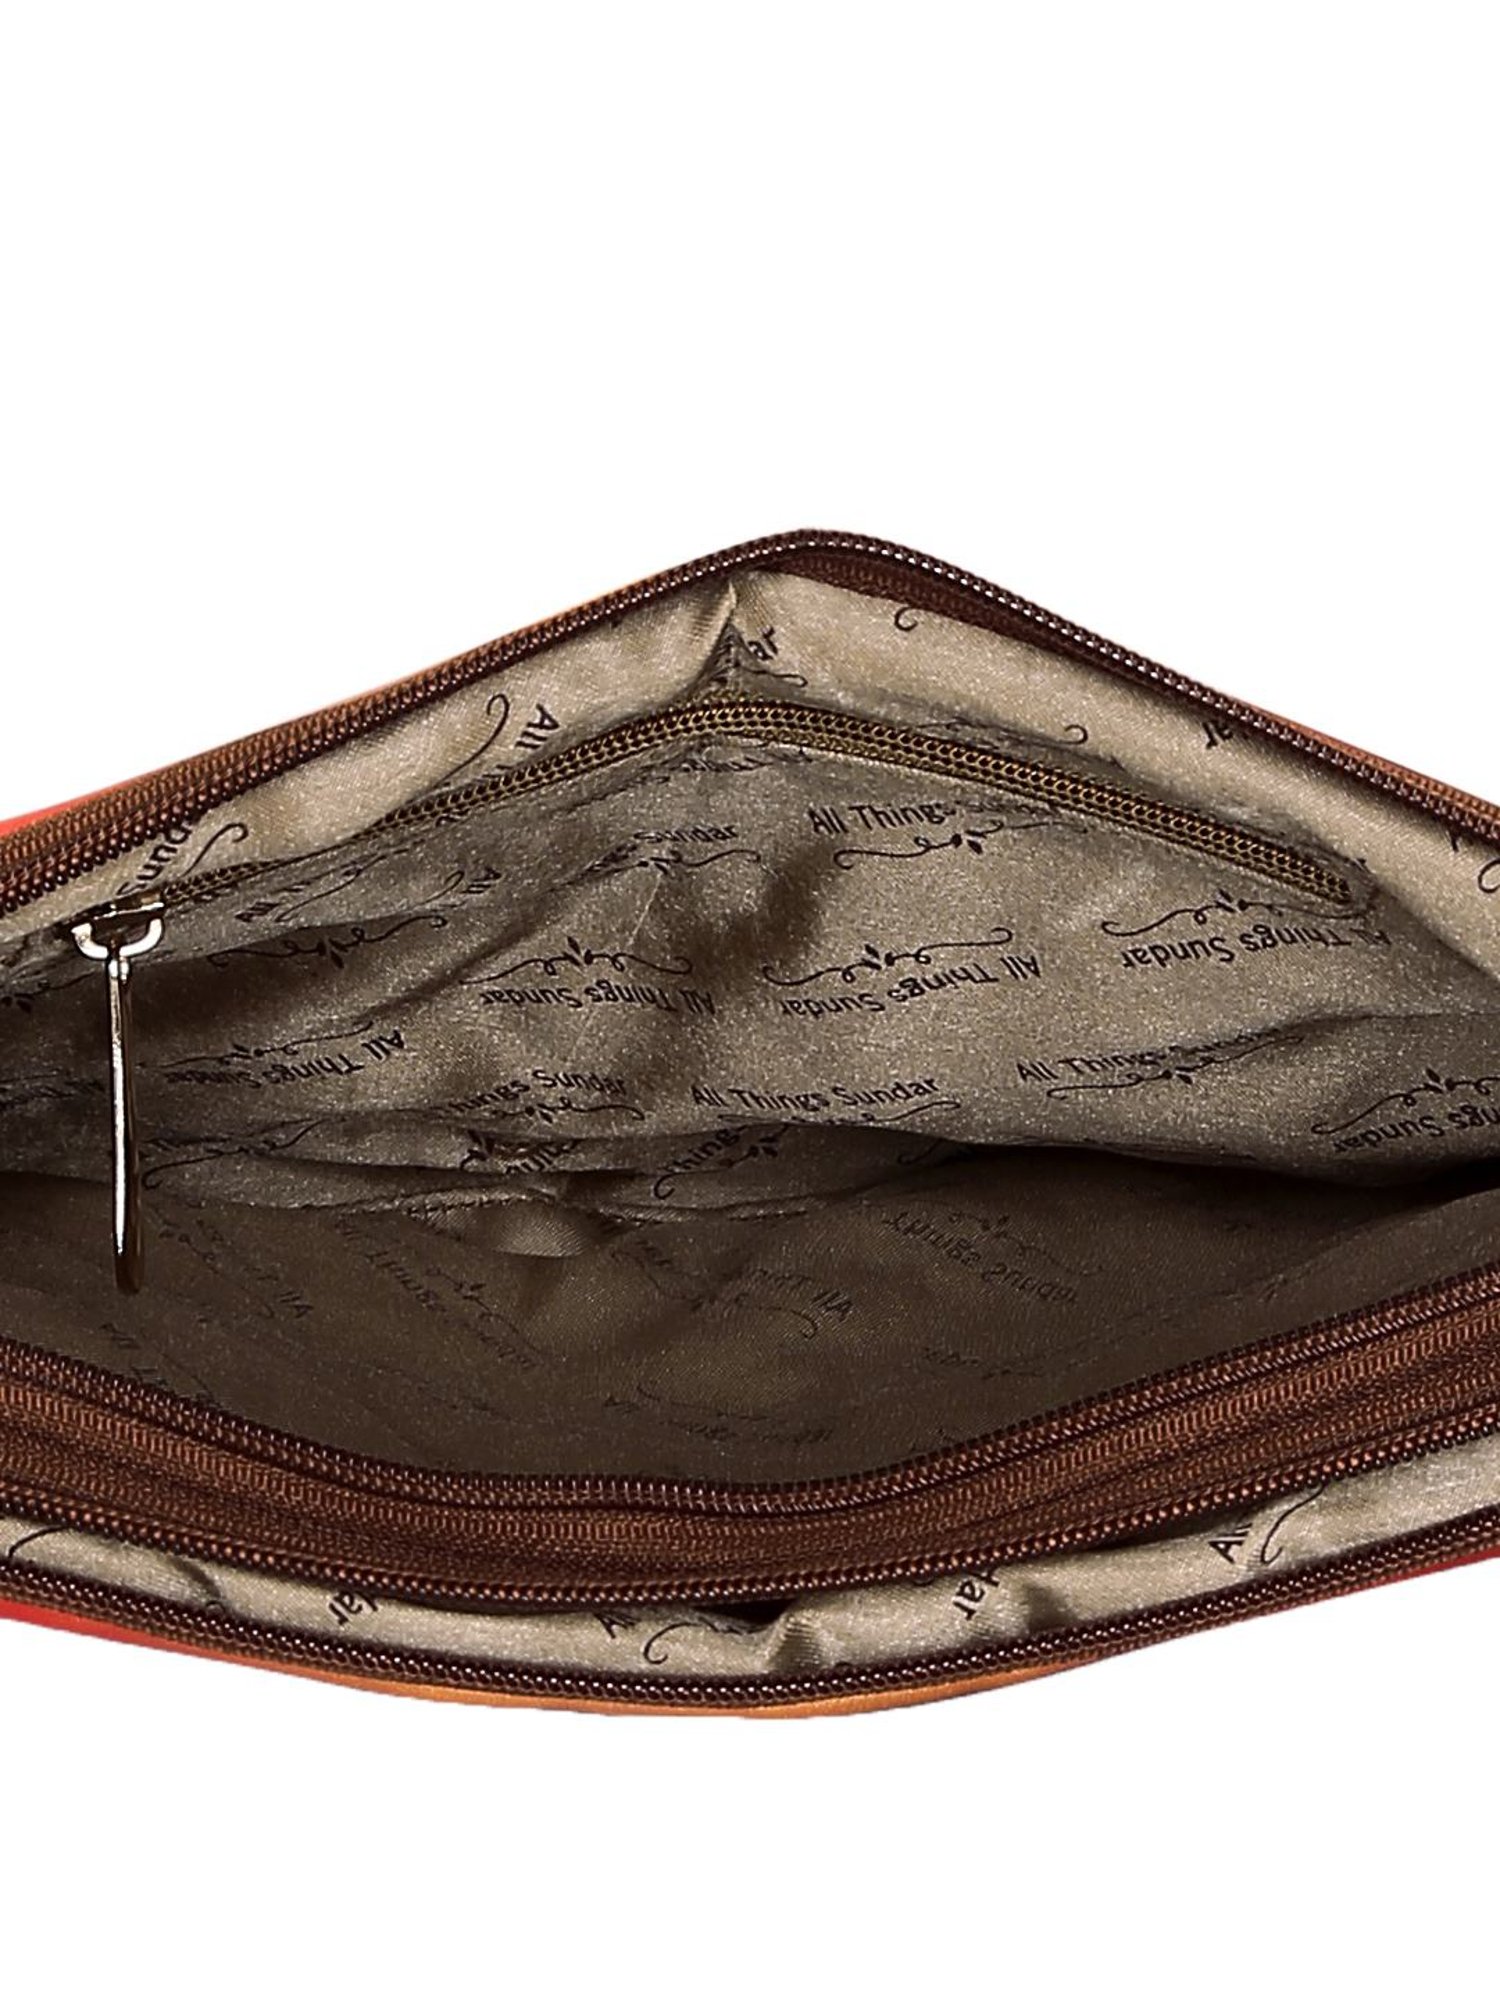 240-65 All things sundar hand bag - Bags and Belts Women Accessories |  World Art Community